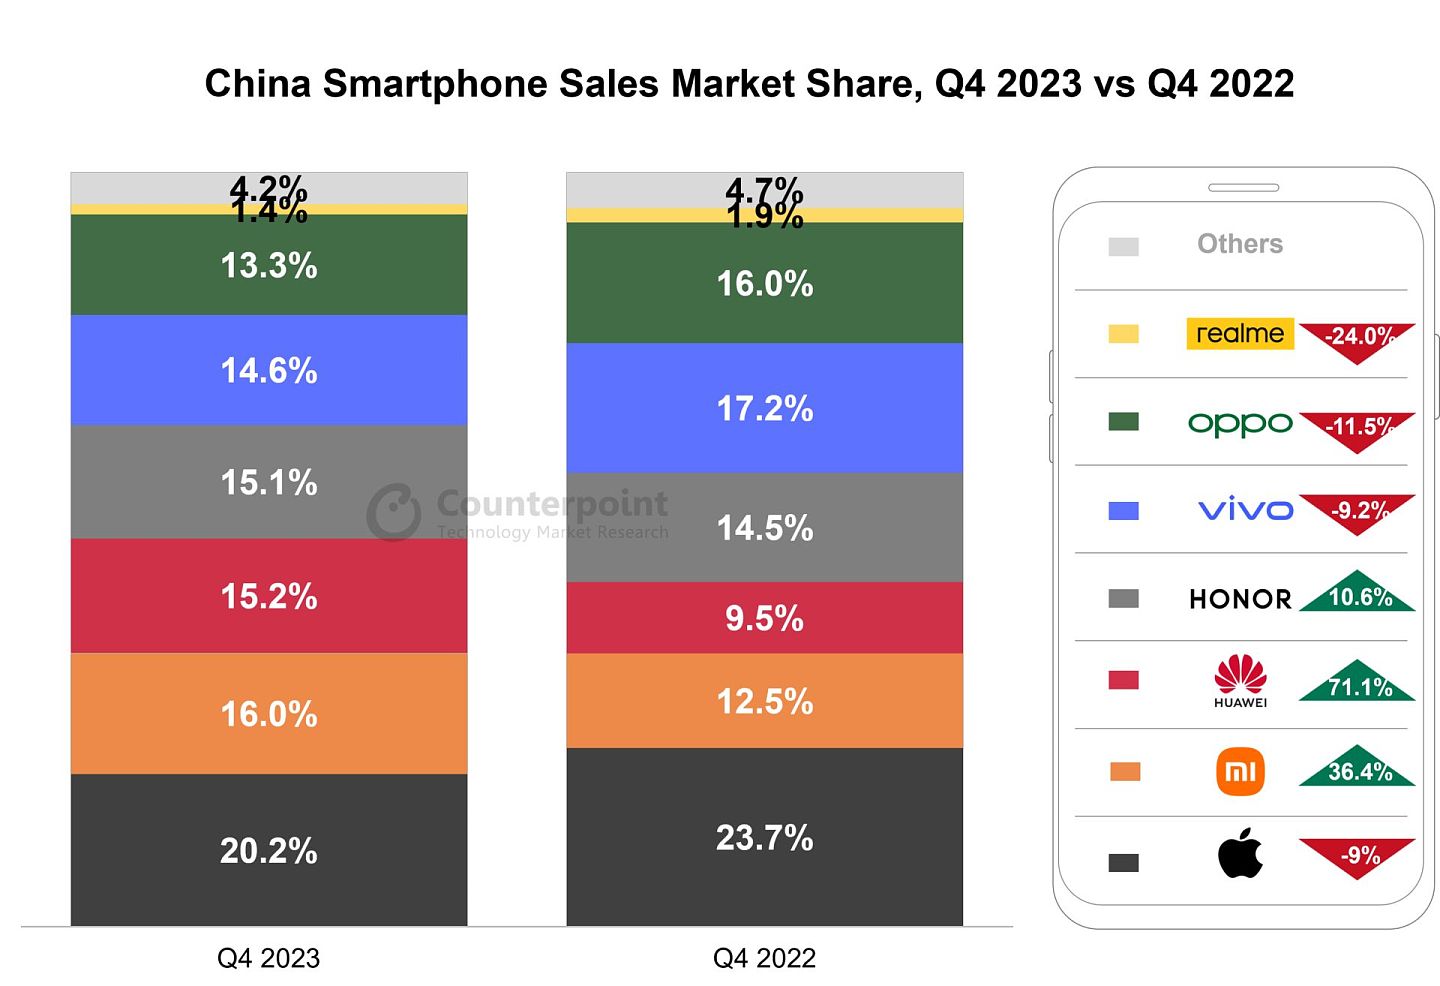 2023Q4 我国手机销量增长 6.6%：苹果减少 9% 第一，小米增长 36.4% 第二、华为增长 71.1% 第三、荣耀增长 10.6% 第四 - 1